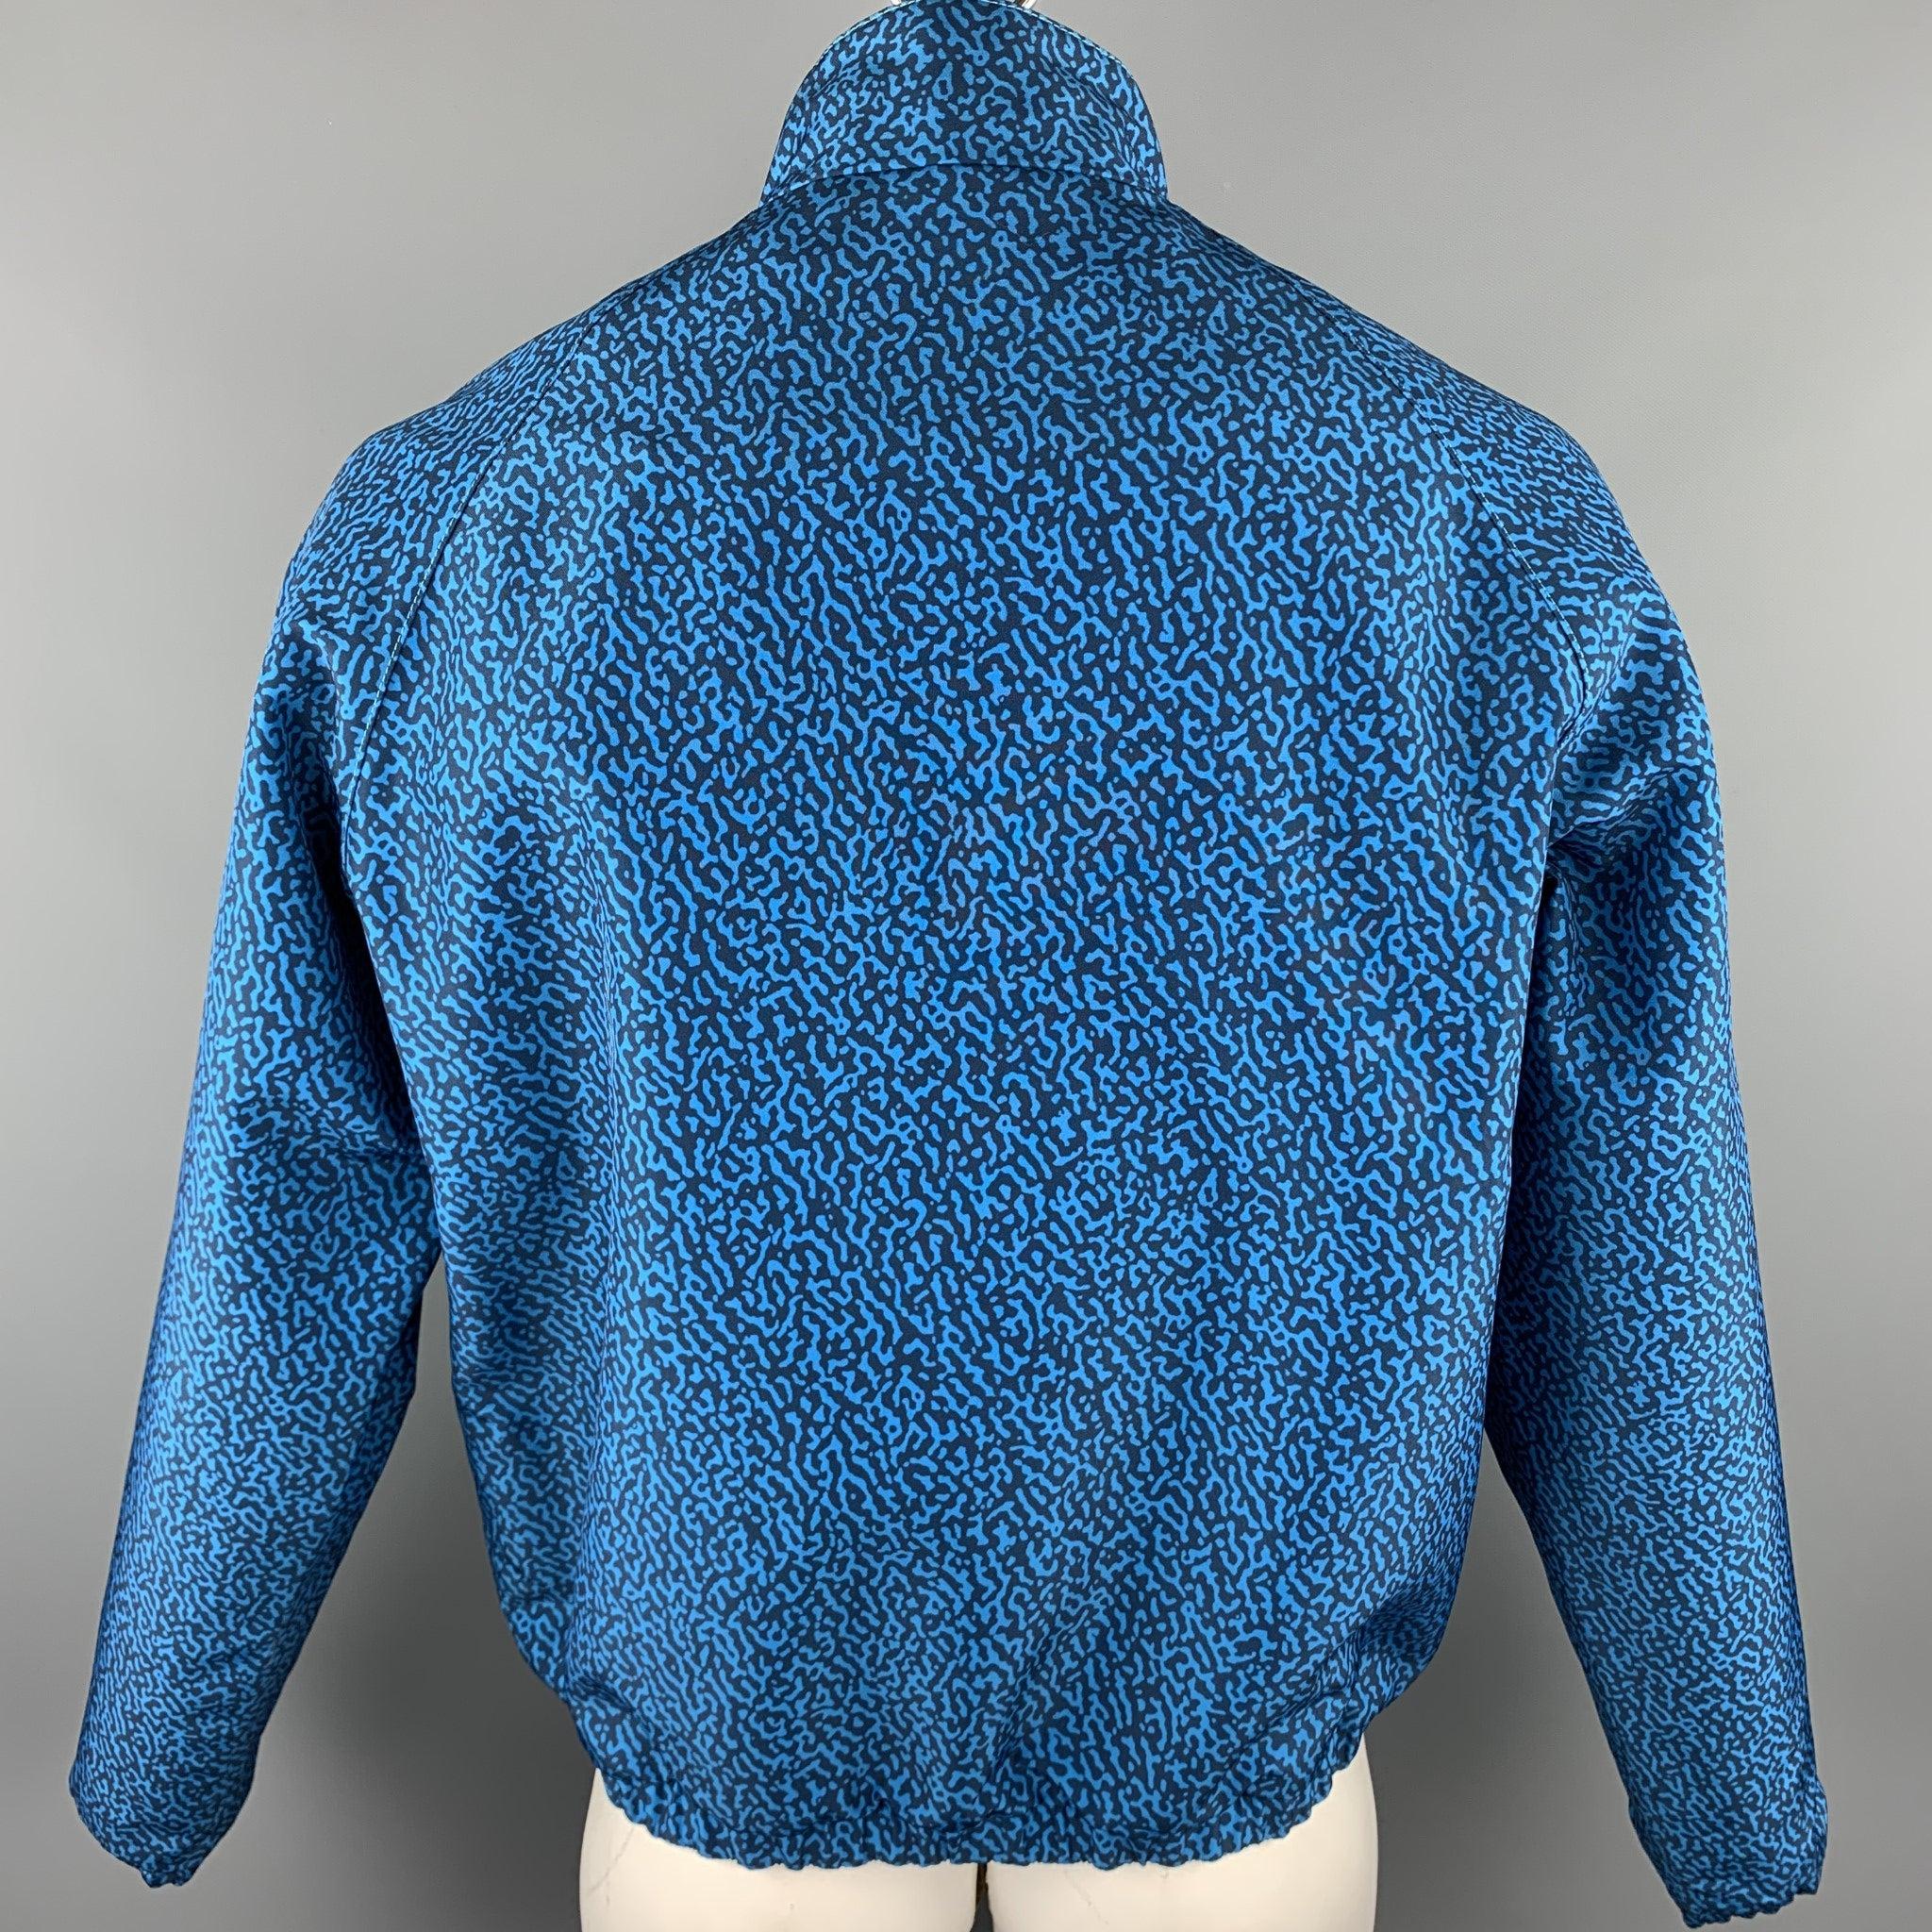 CALVIN KLEIN COLLECTION Size 44 Aqua Print Polyester Reversible Jacket For Sale 1